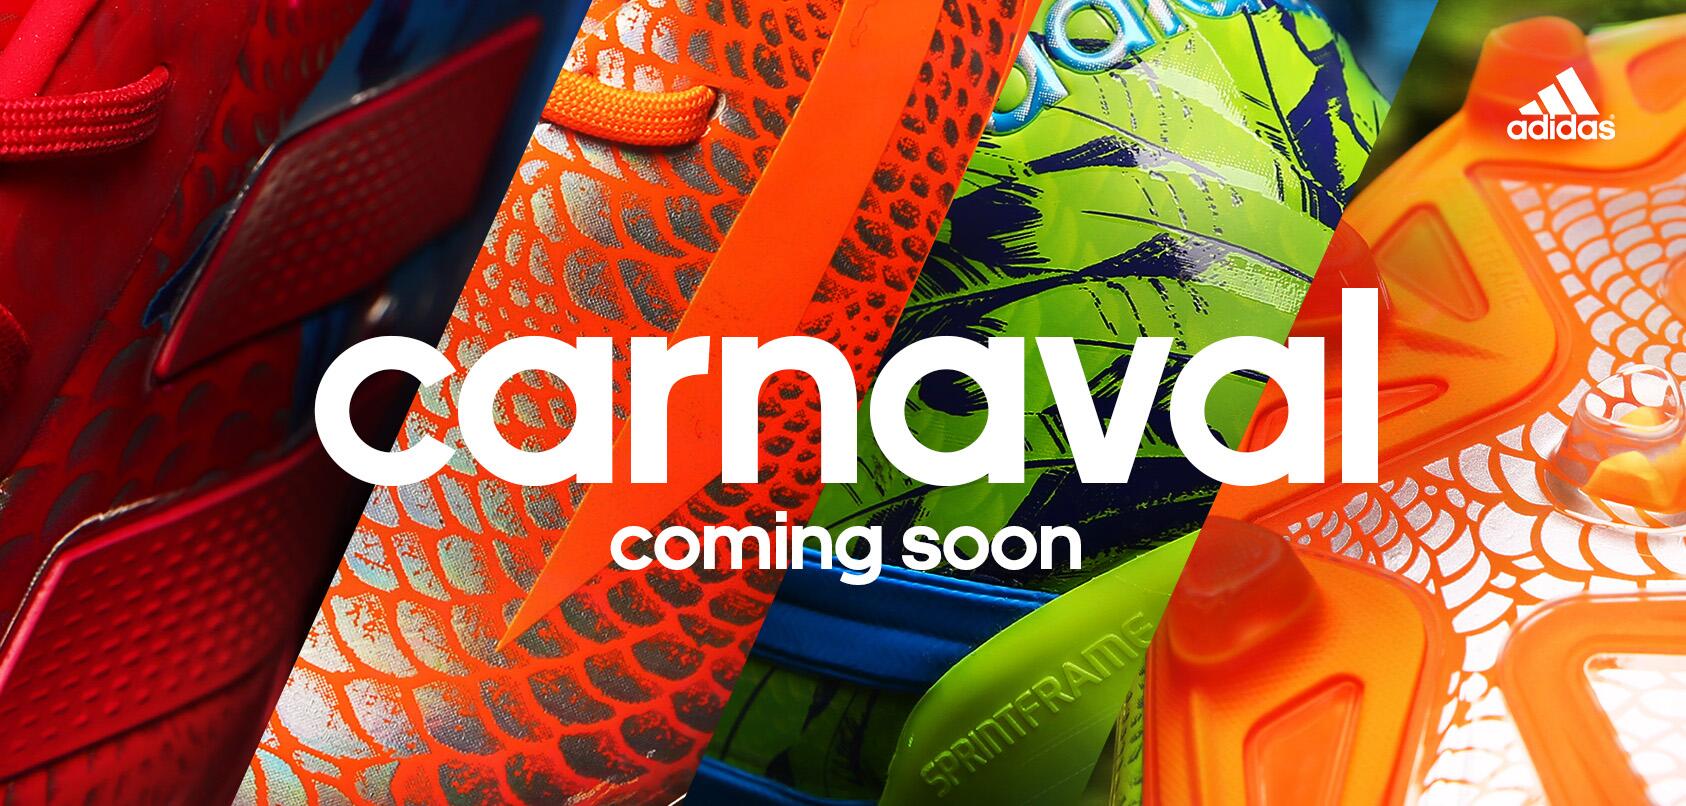 adidas Football "Celebrate Carnaval the Carnaval Pack. soon. 04/03/14 http://t.co/qSegzjPtxD" / Twitter